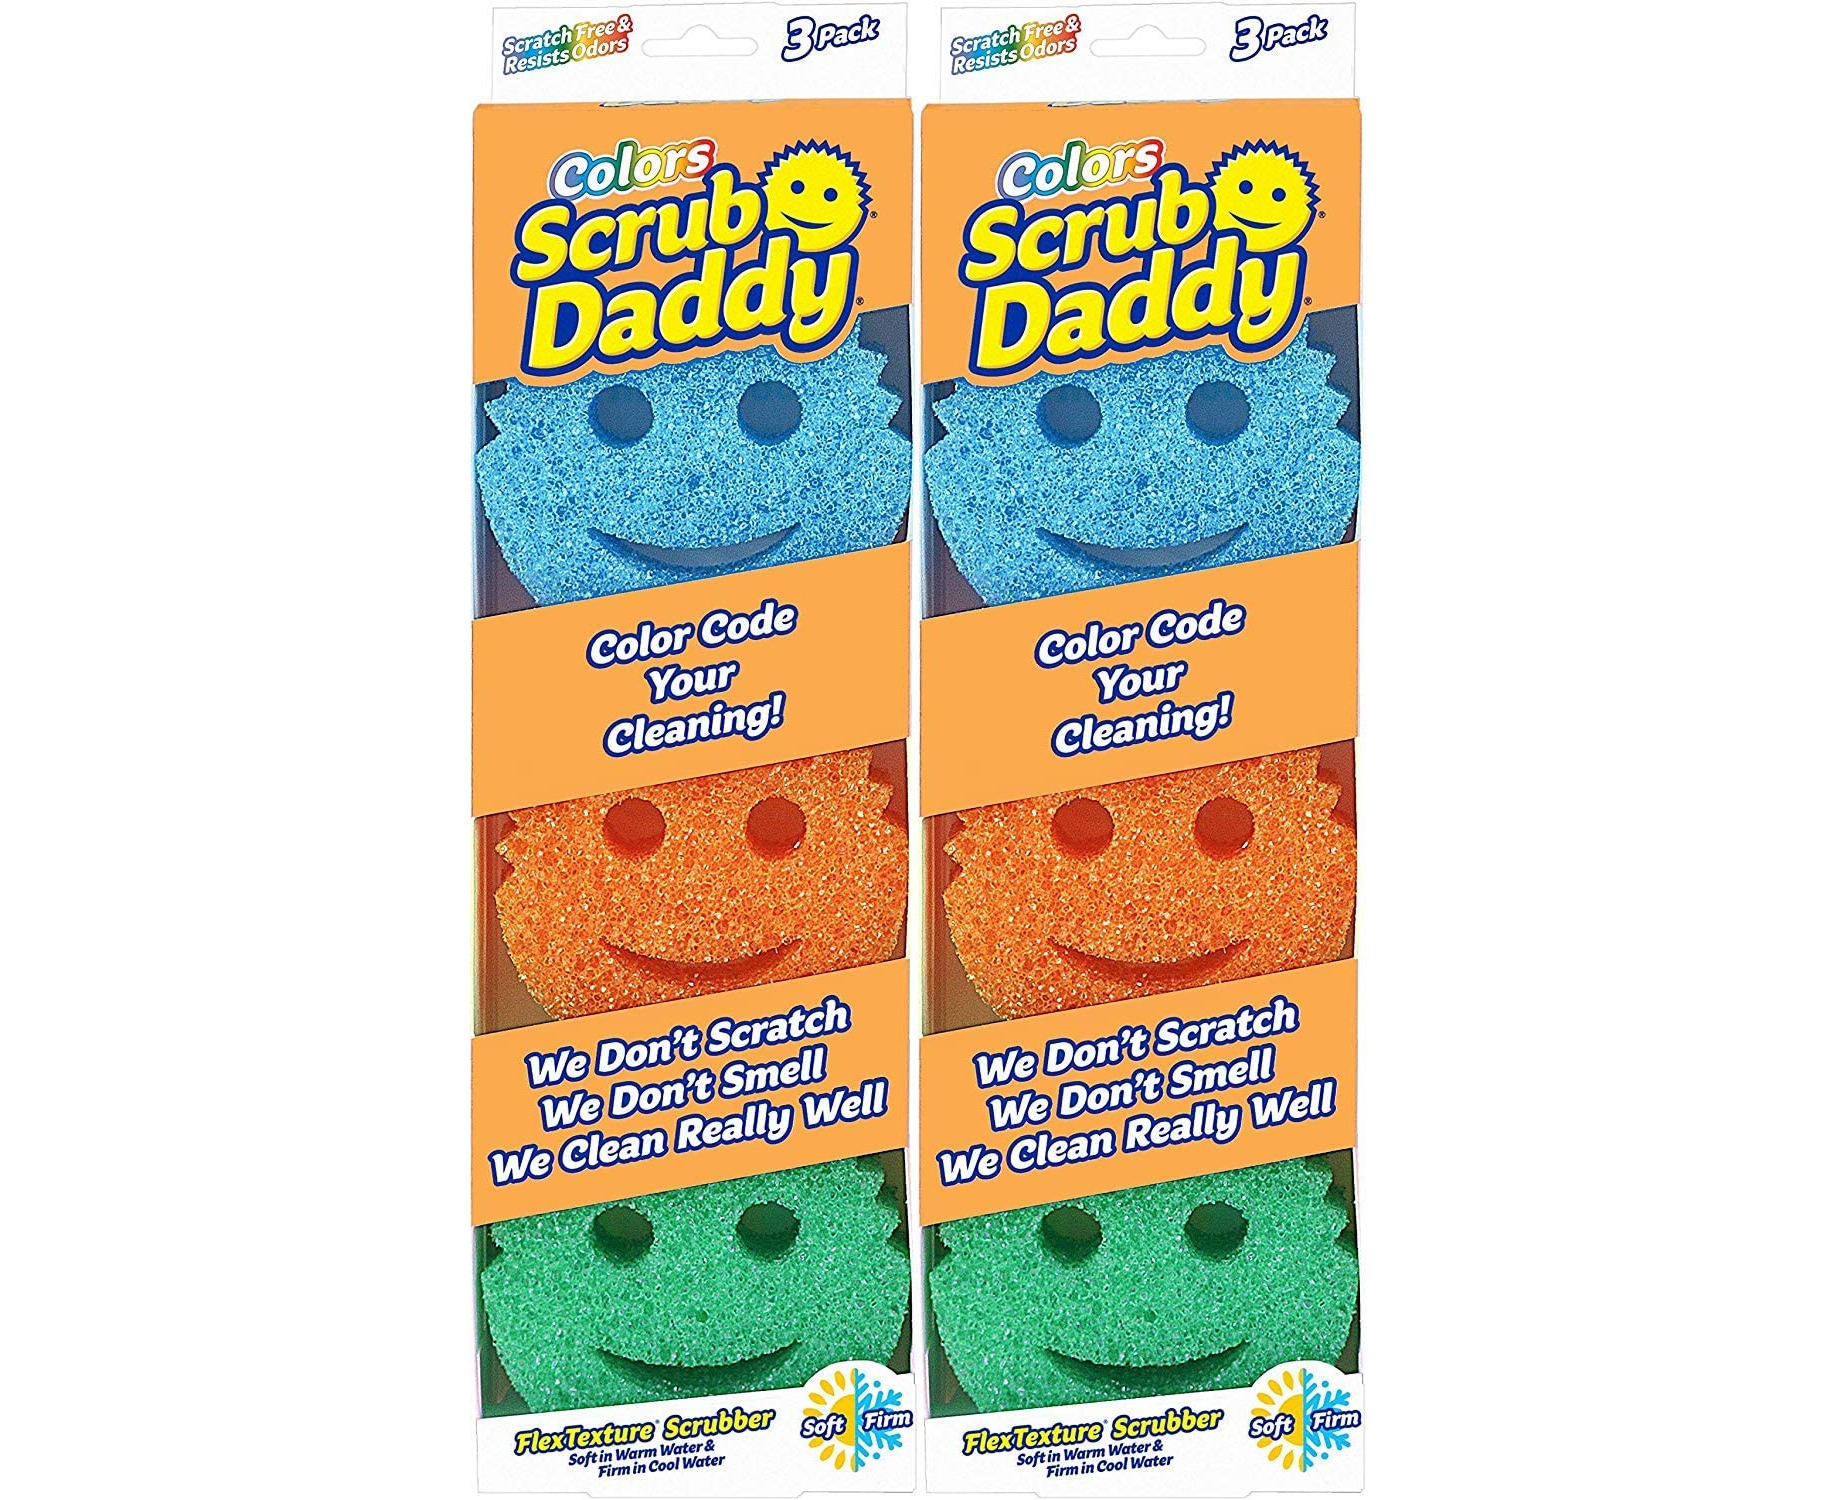 Colors Scrub Daddy - Orange